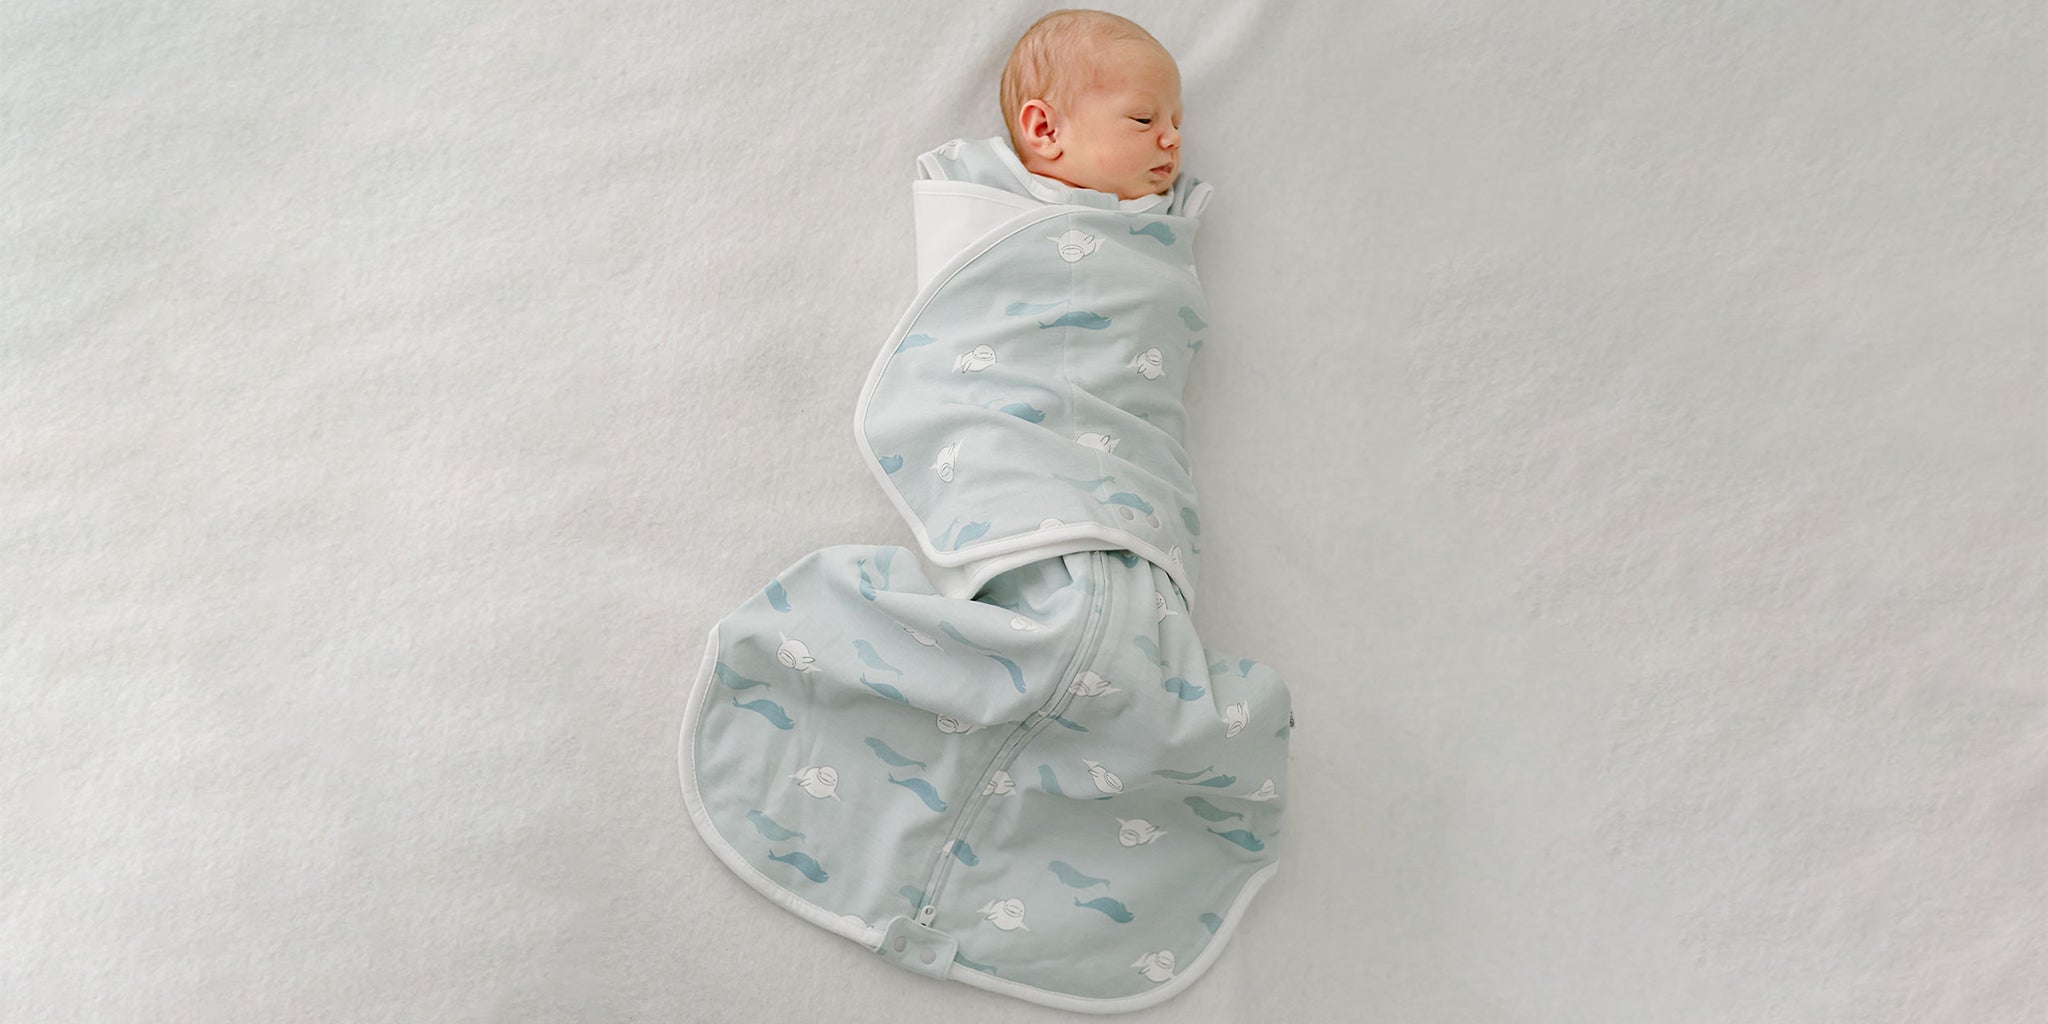 Nest Designs Baby's Sleep Bag